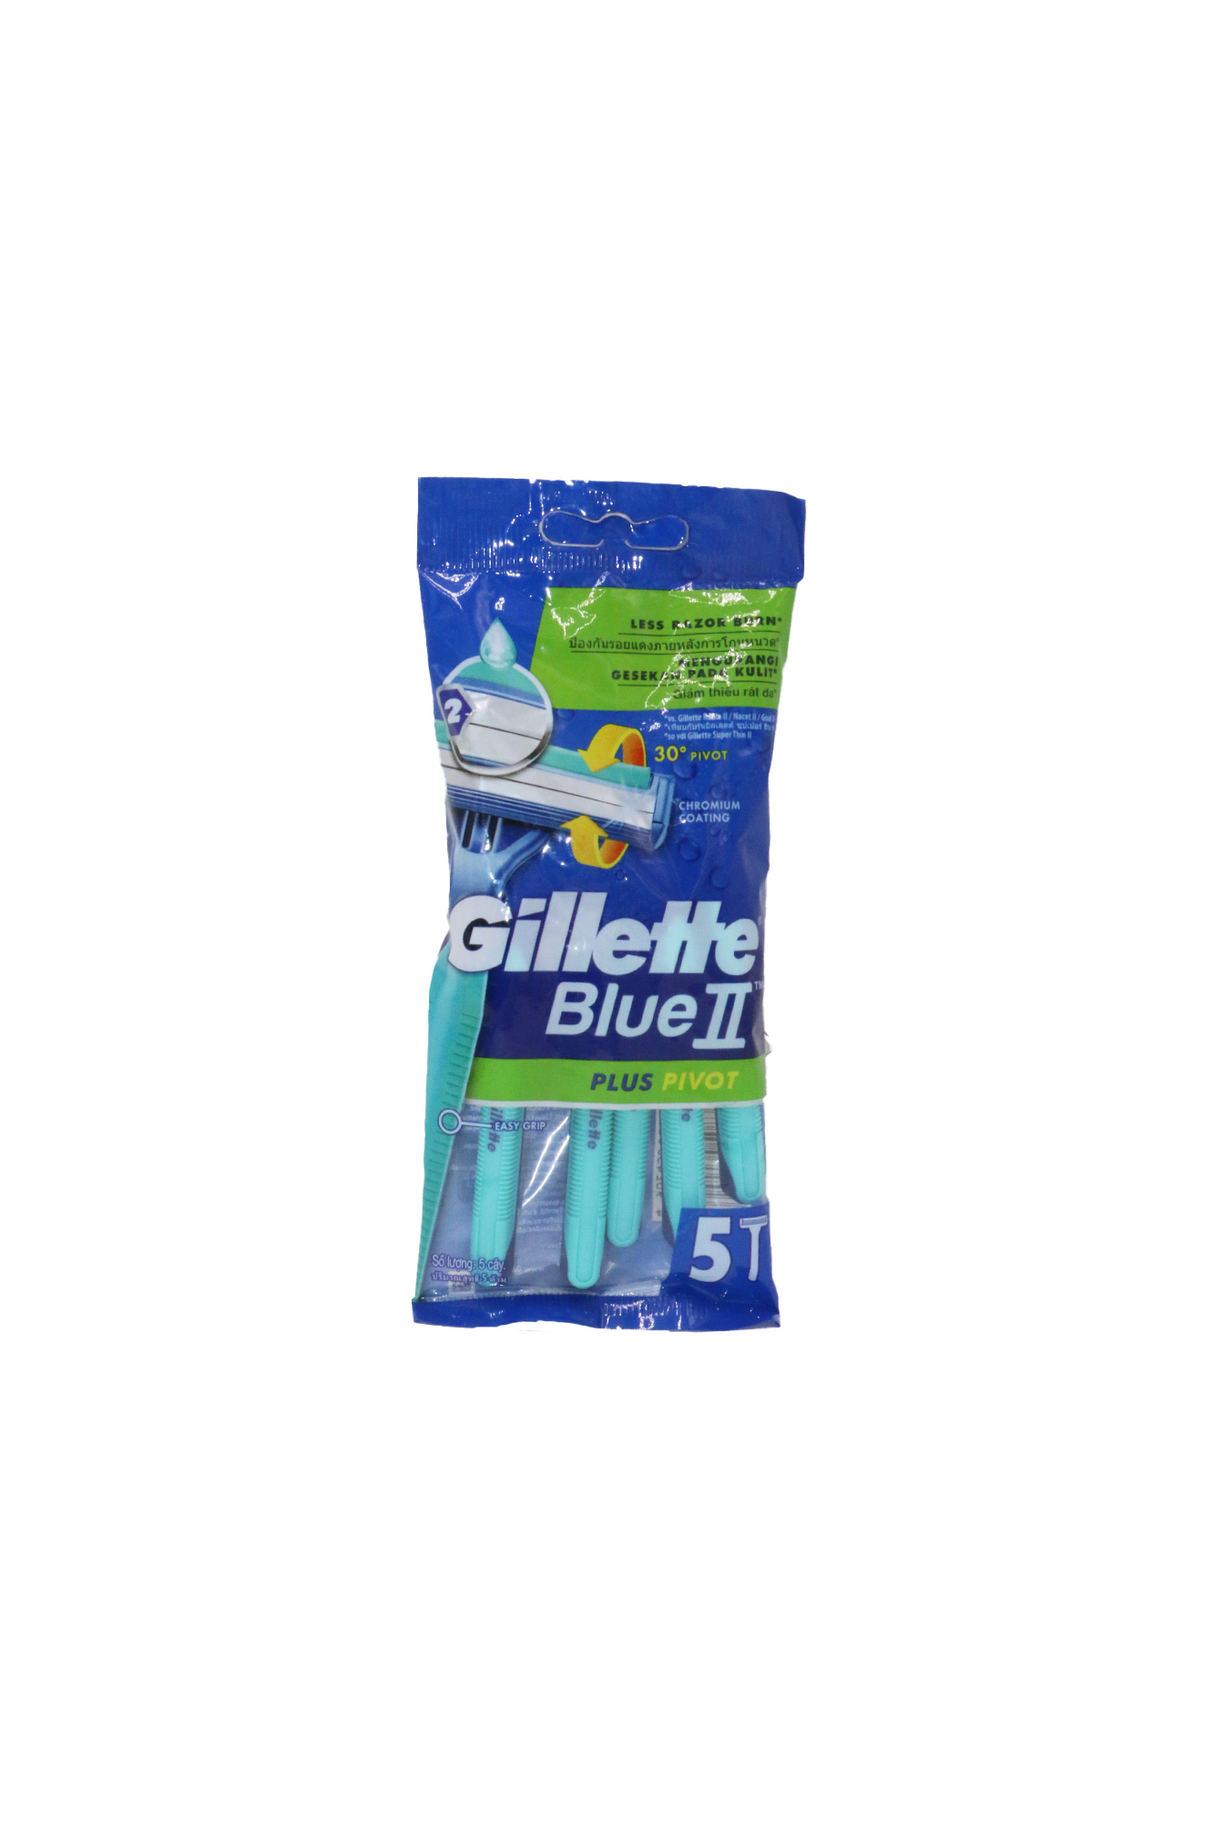 gillette razor blue 2plus pivot 5p